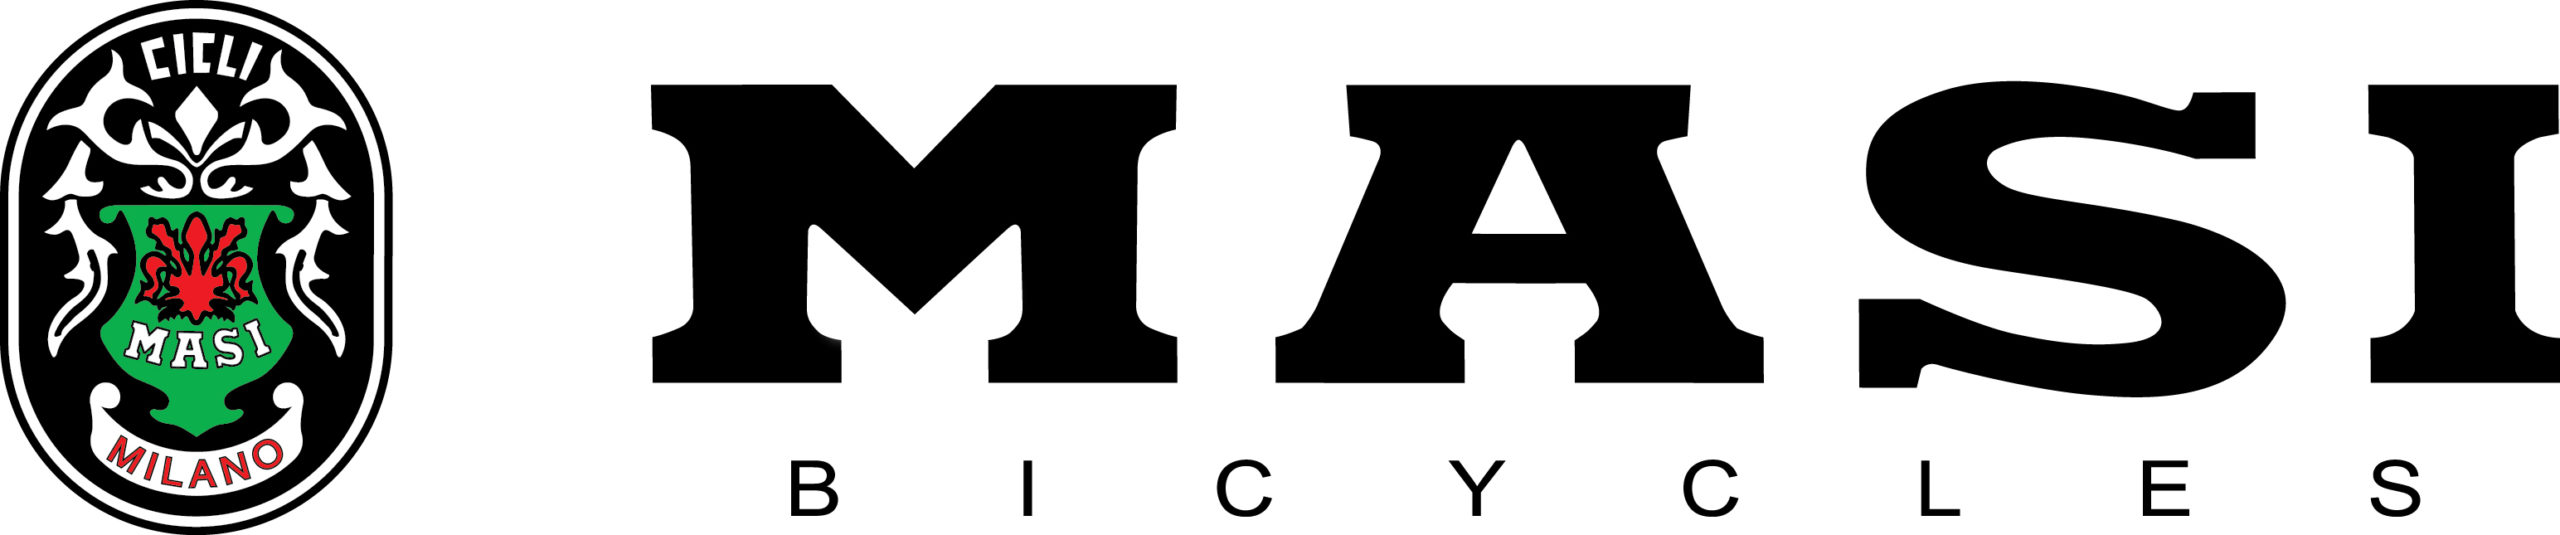 ebykr-masi-new-logo